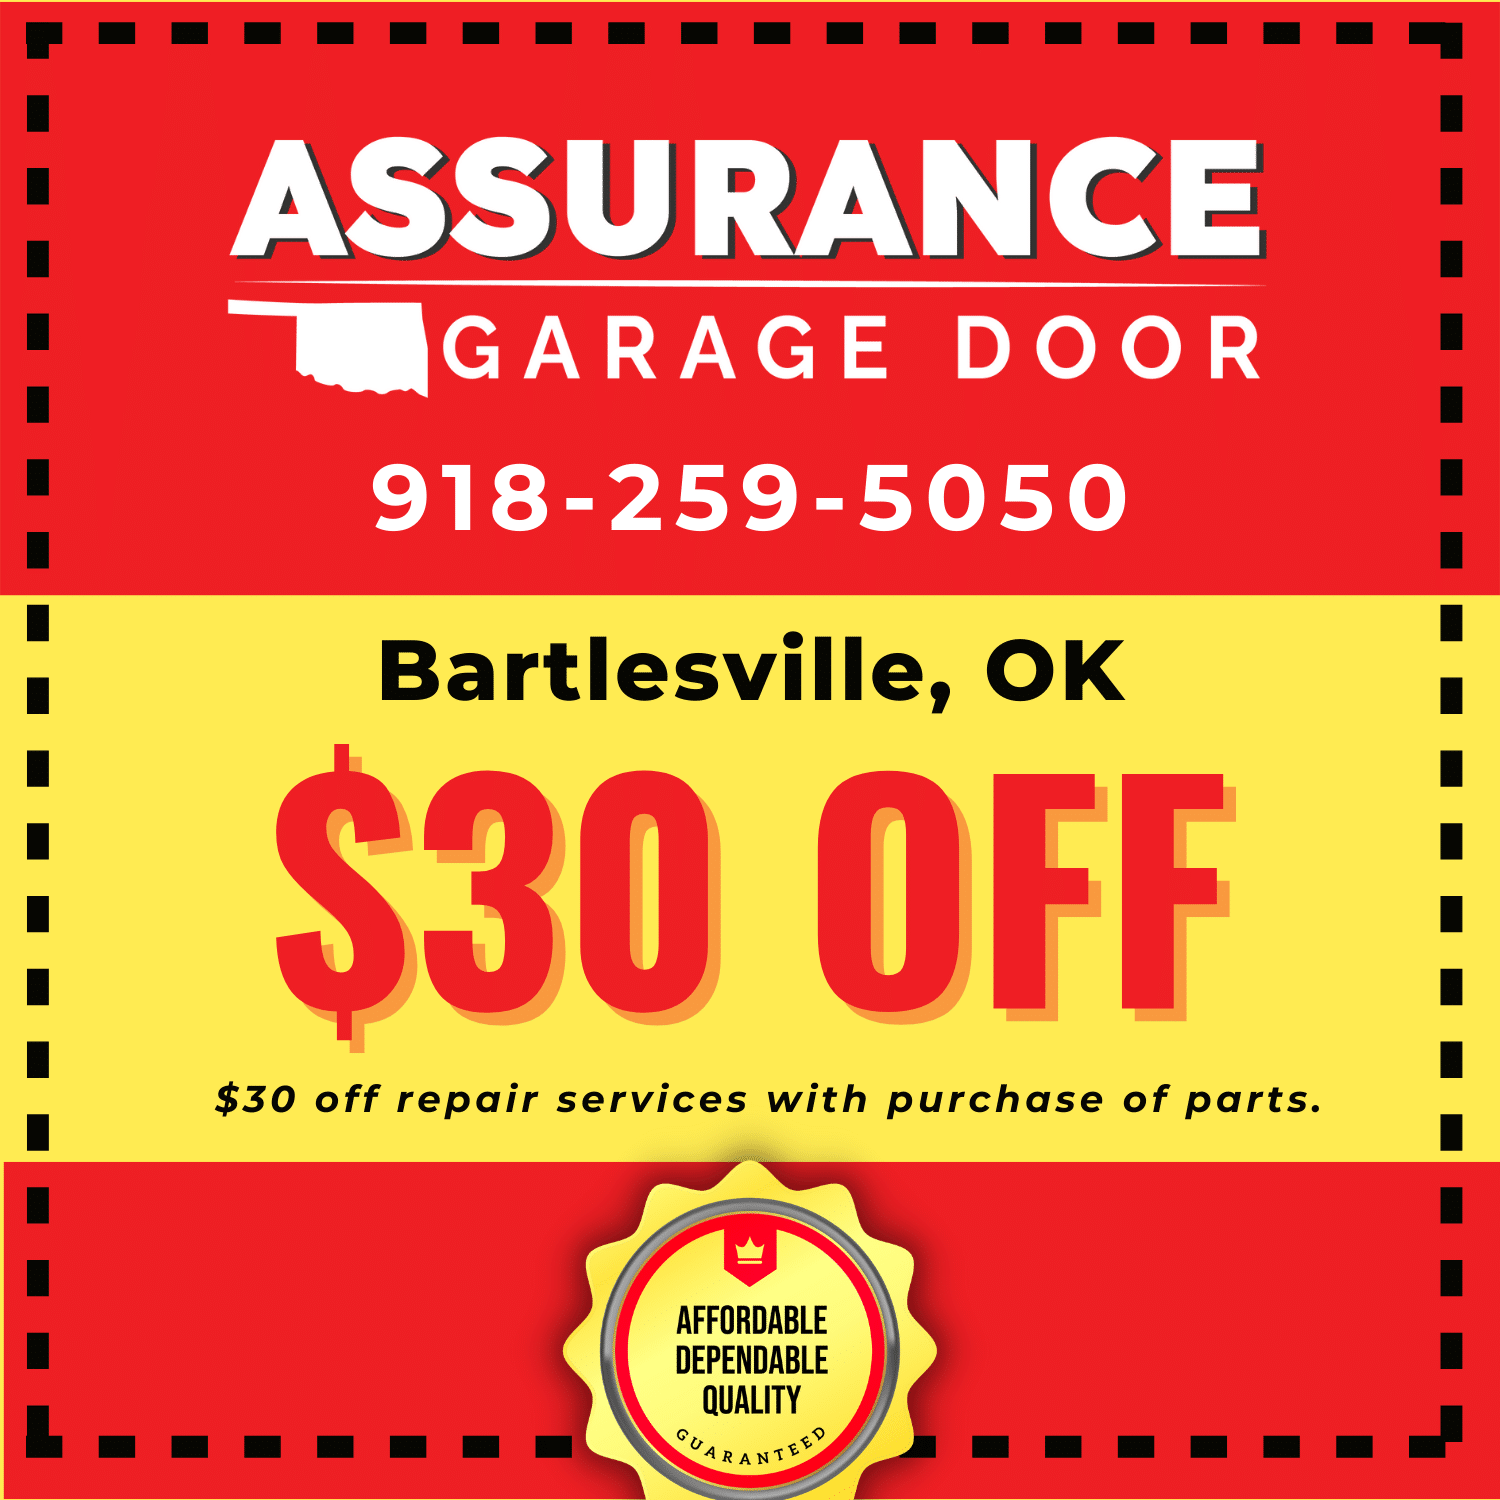 Location Coupon - Bartlesville - Assurance Garage Door Coupon